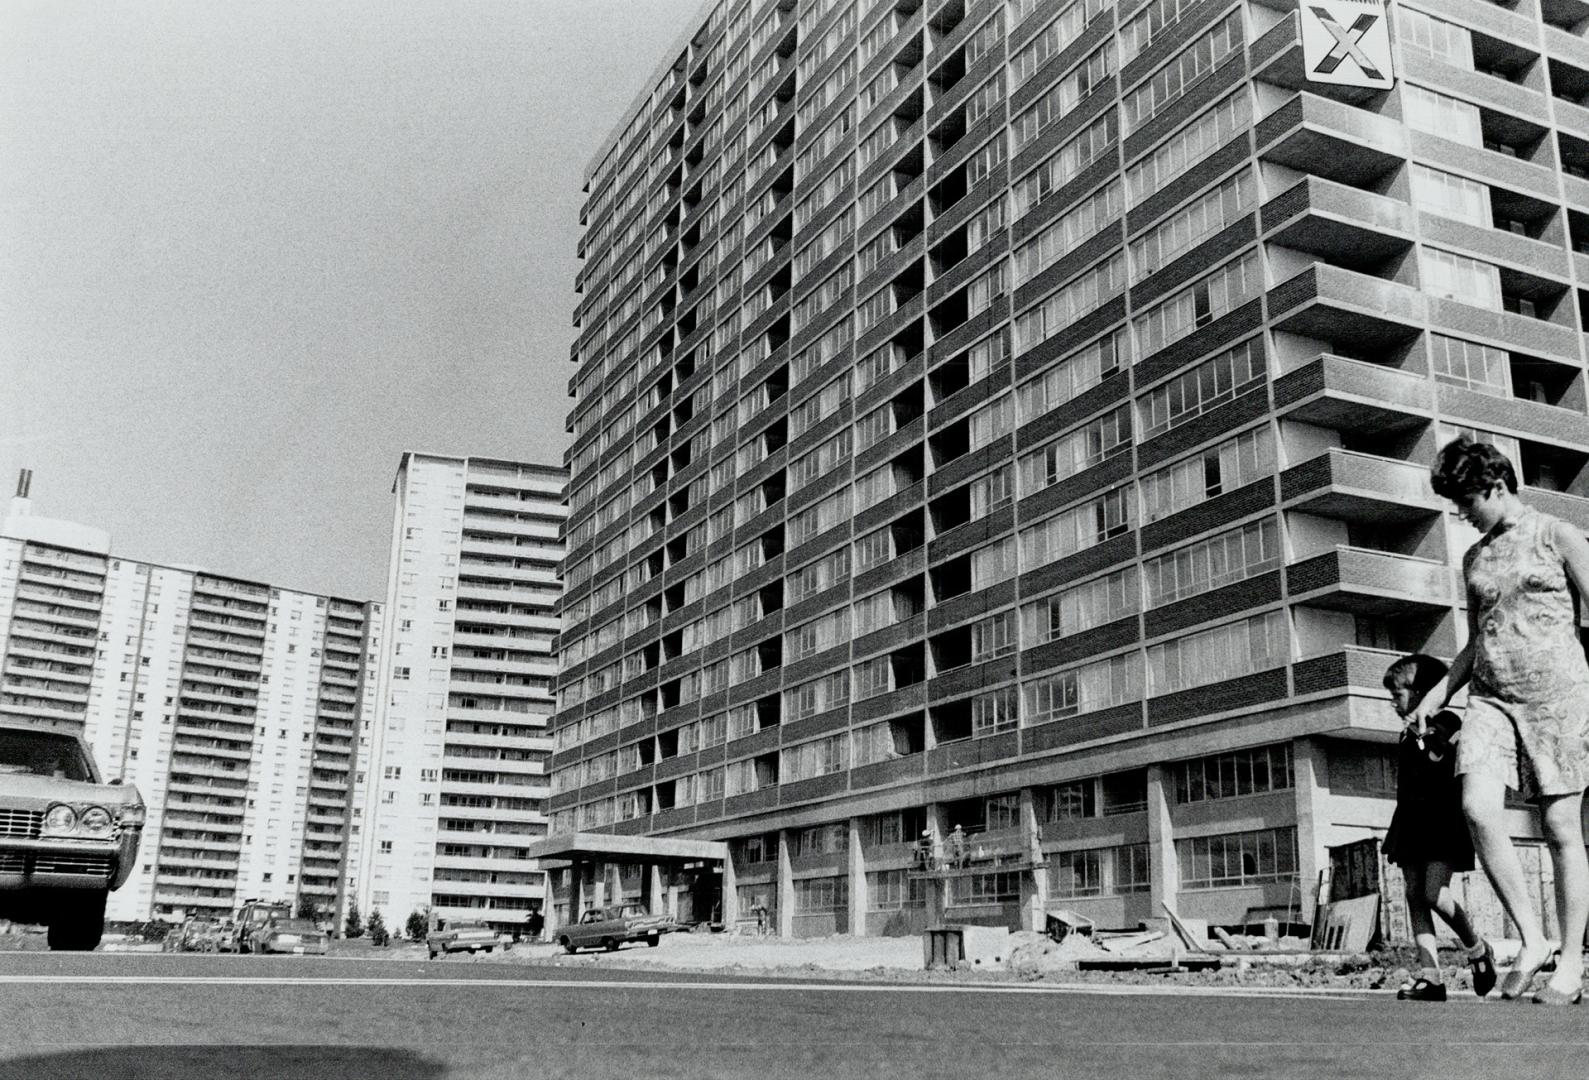 Canada - Ontario - Toronto - Apartments 1968